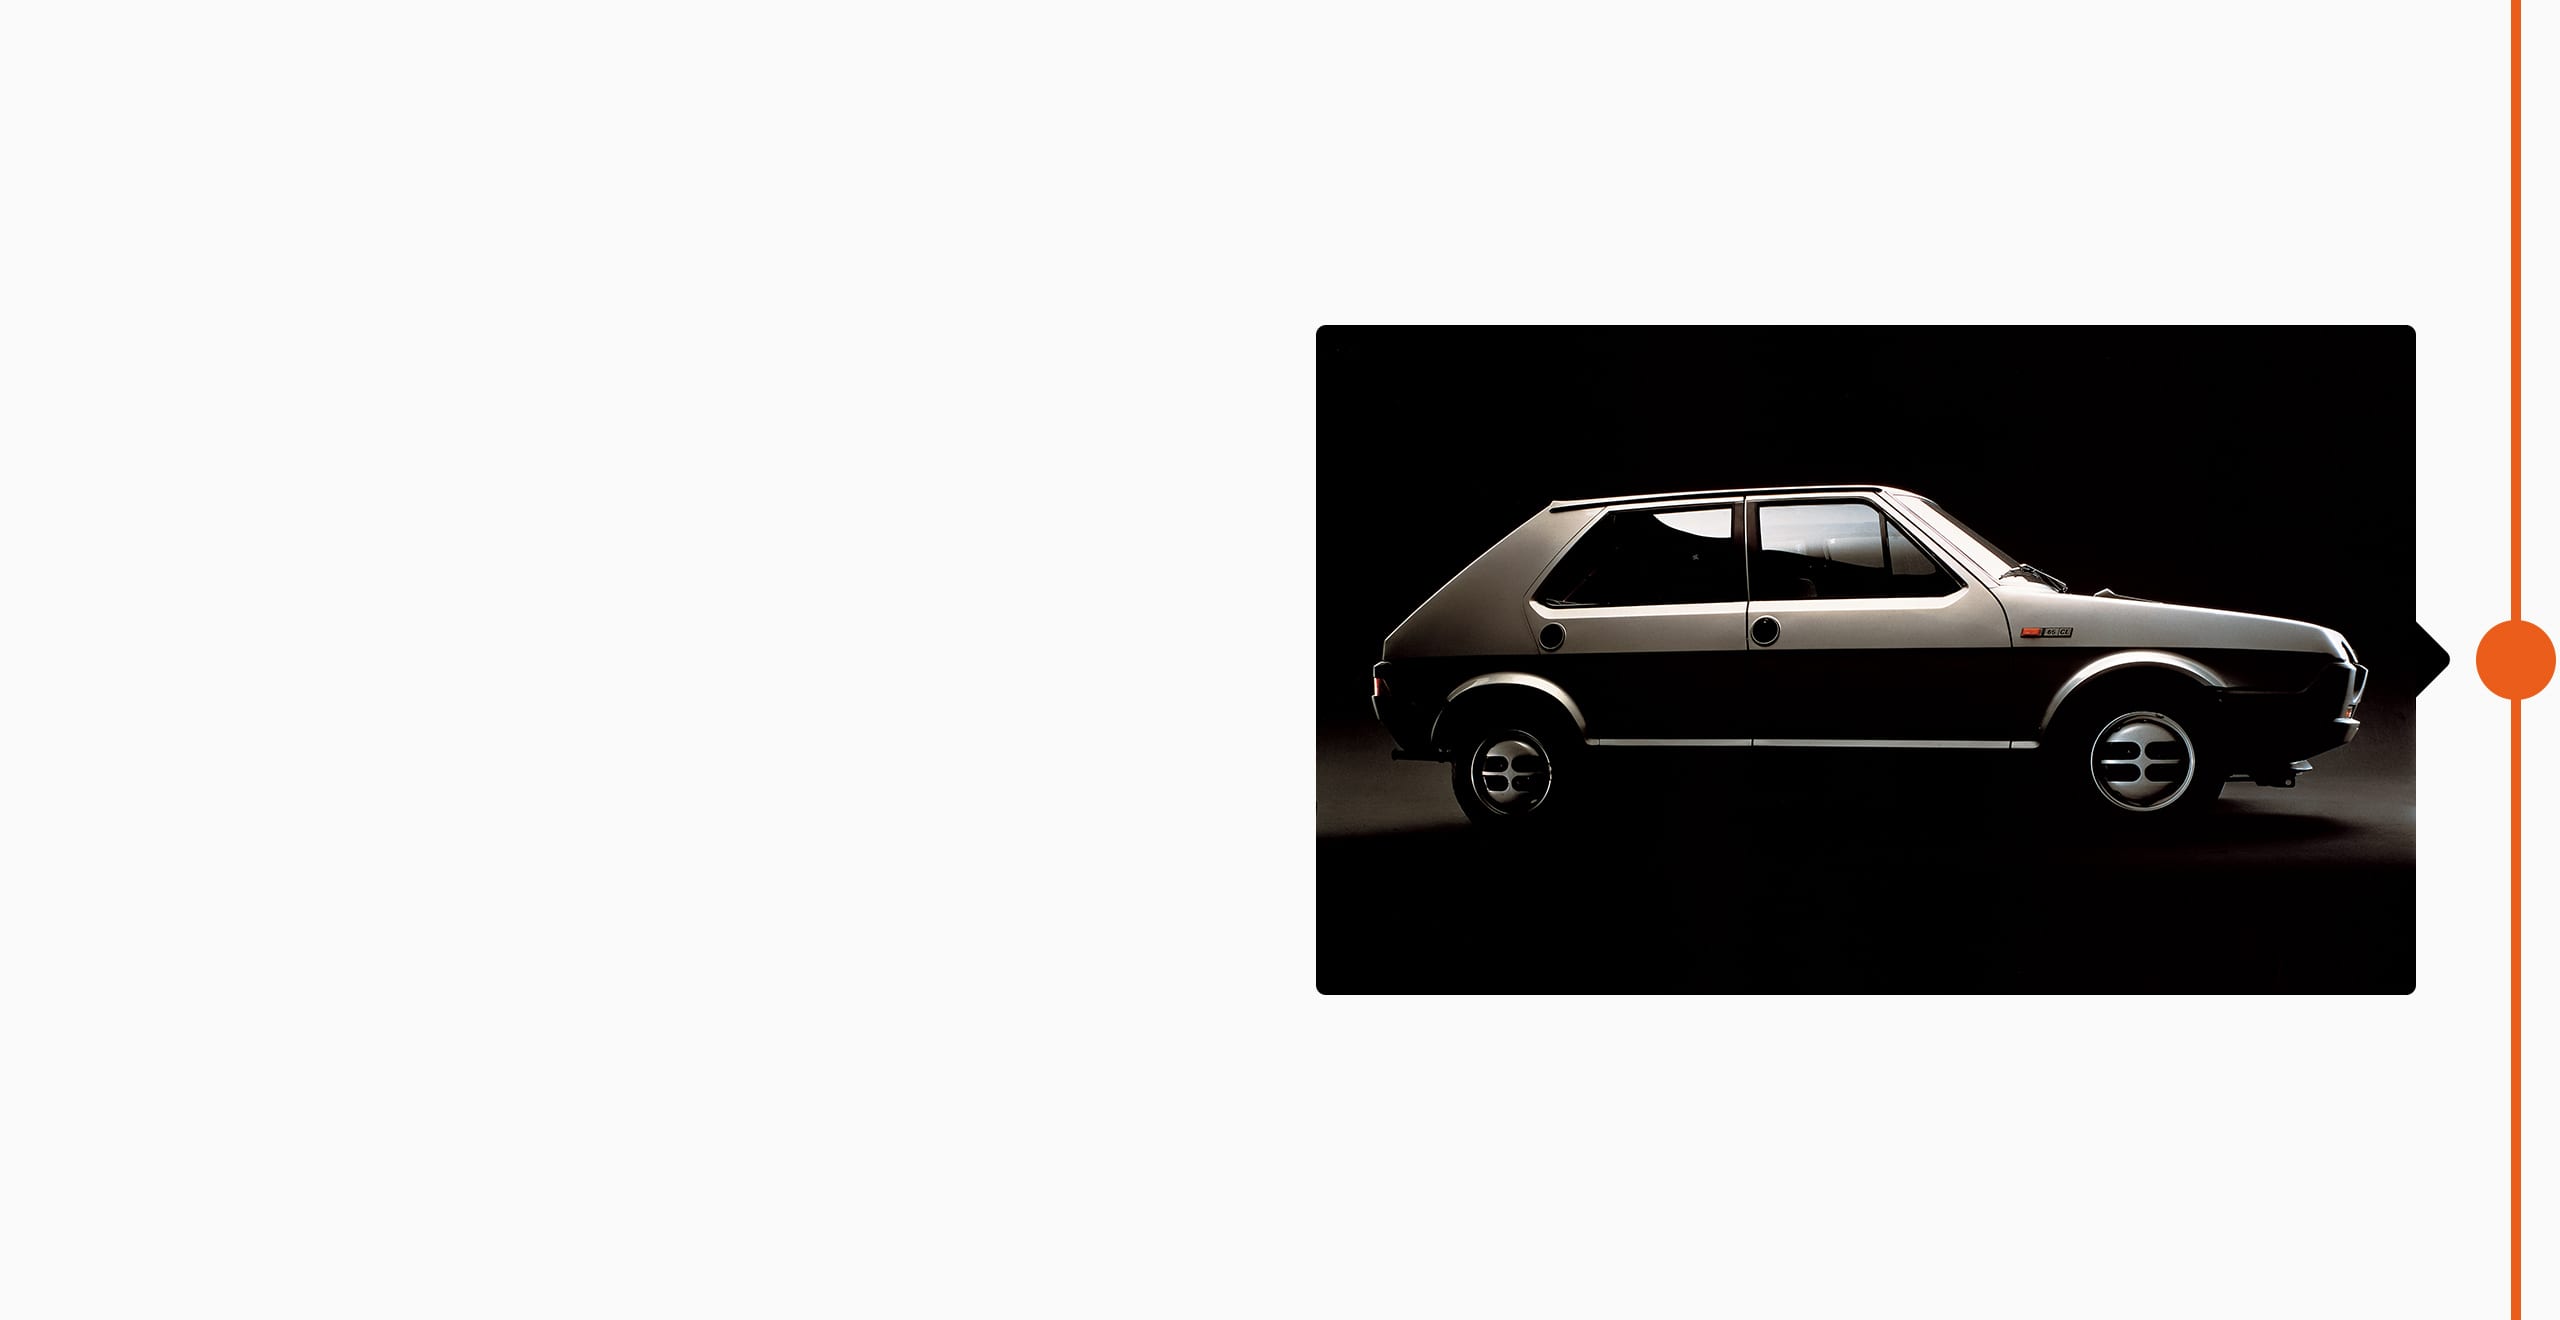  Histoire de la marque SEAT 1979 - SEAT Ritmo nouveau design automobile